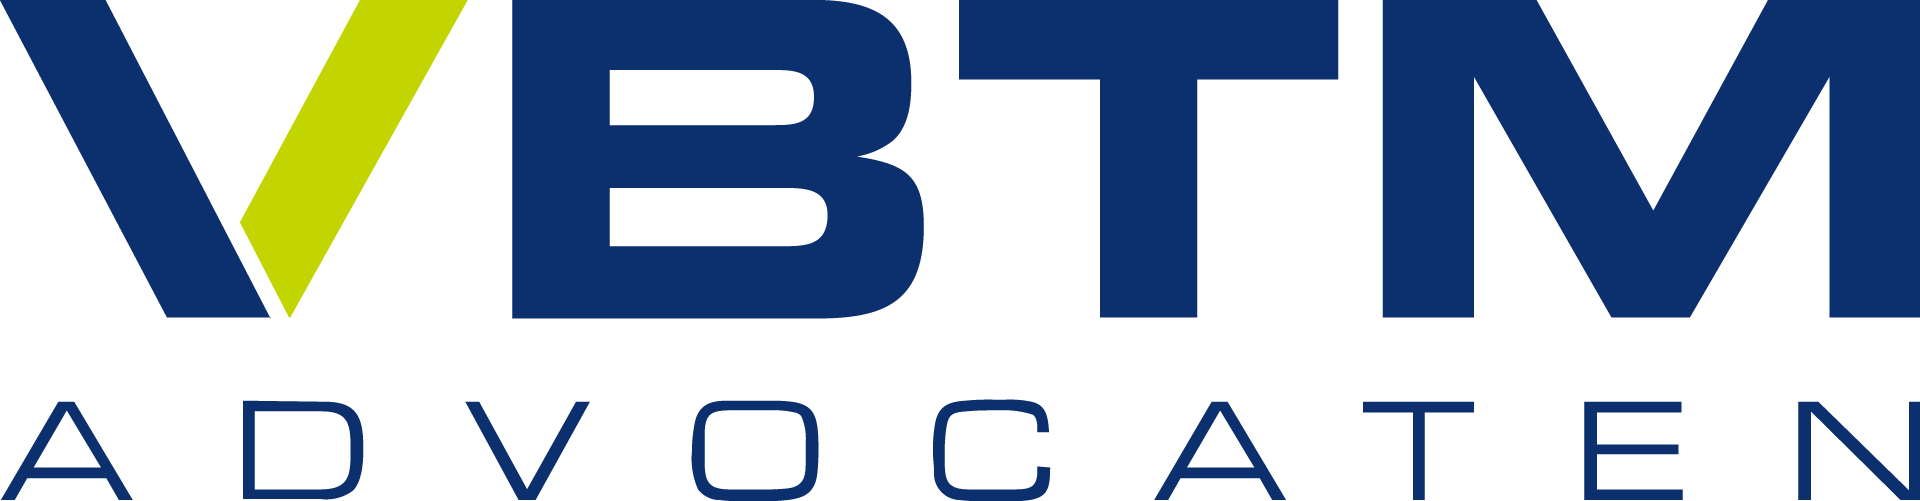 VBTM logo